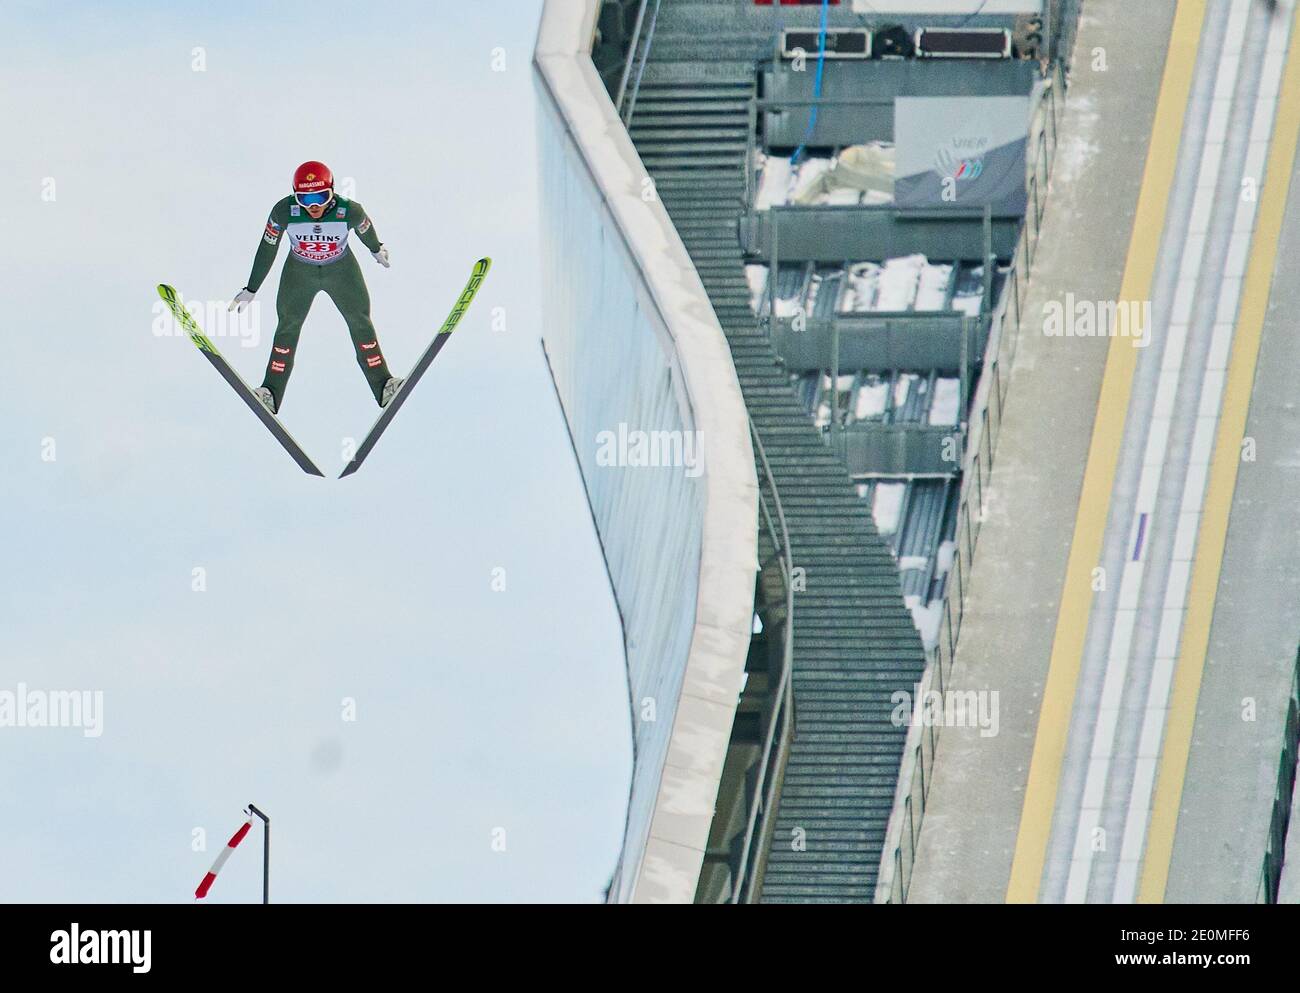 Philipp ASCHENWALD, AUT  in action at the Four Hills Tournament Ski Jumping at Olympic Stadium, Grosse Olympiaschanze in Garmisch-Partenkirchen, Bavaria, Germany, January 01, 2021.  © Peter Schatz / Alamy Live News Stock Photo